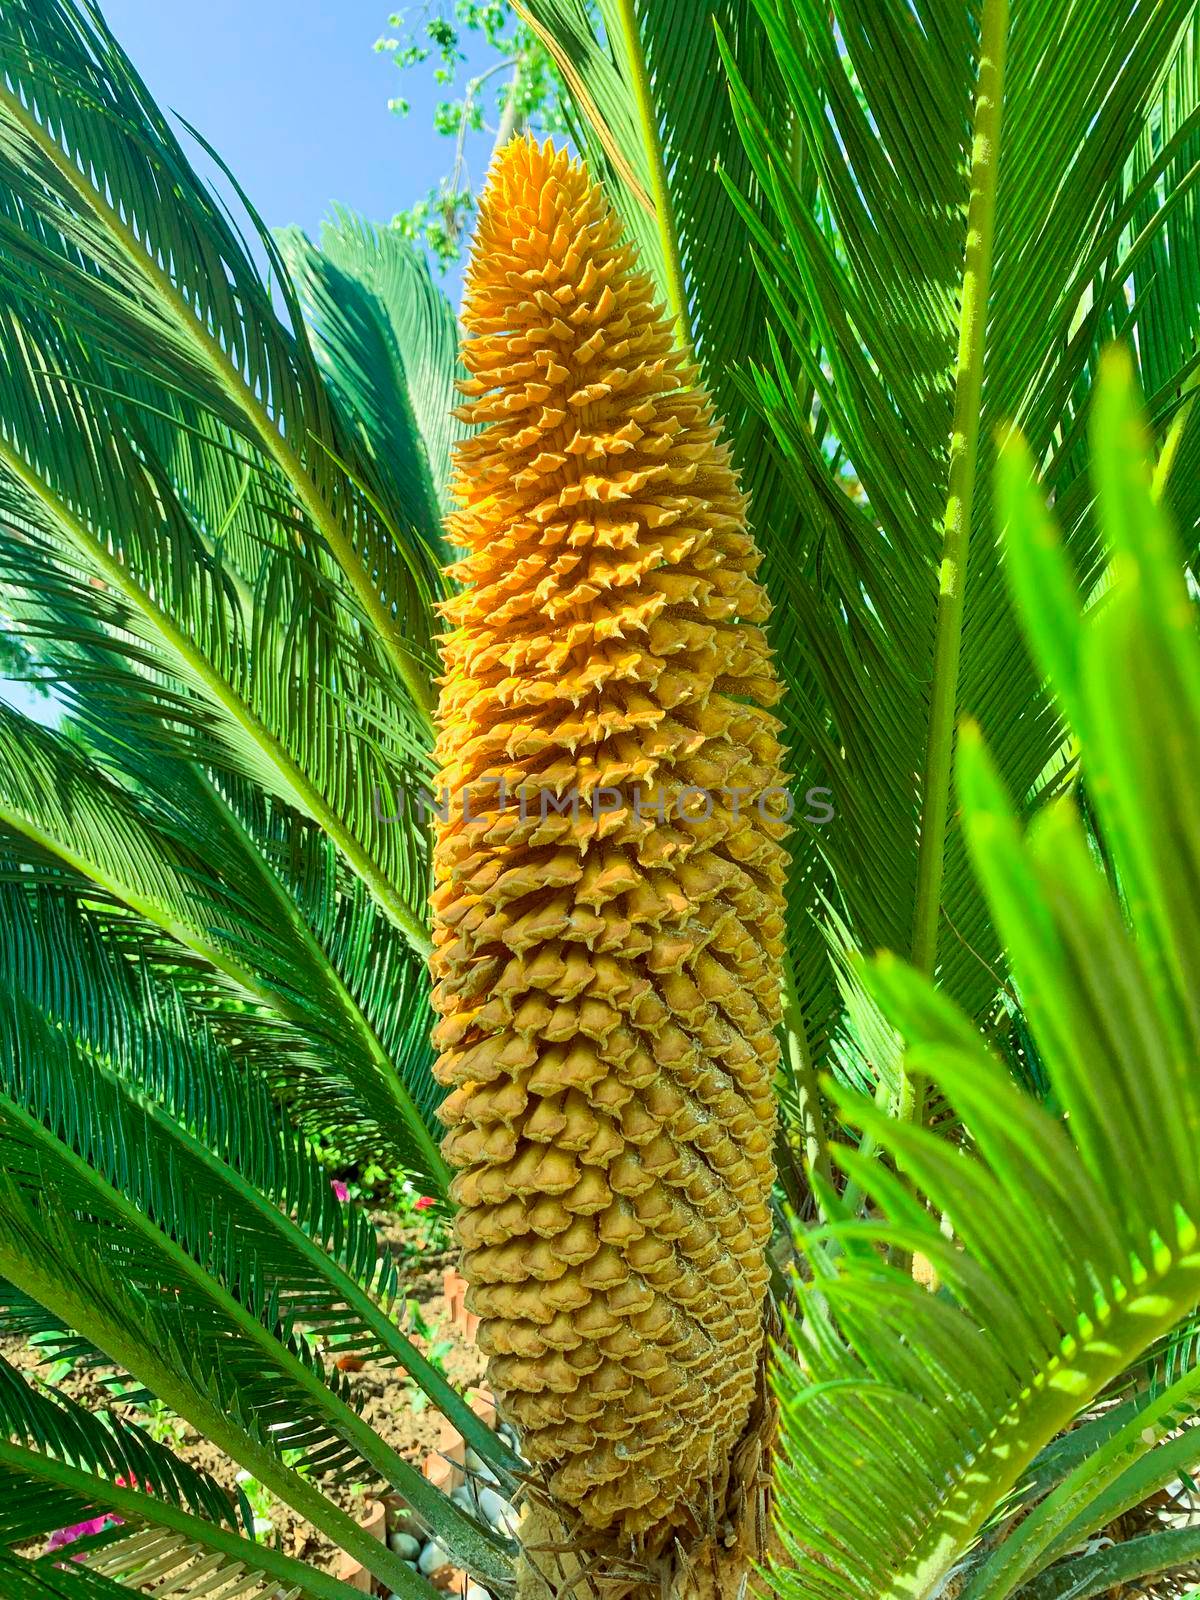 Evergreen plant Cycas rumphii cone. Studio Photo.